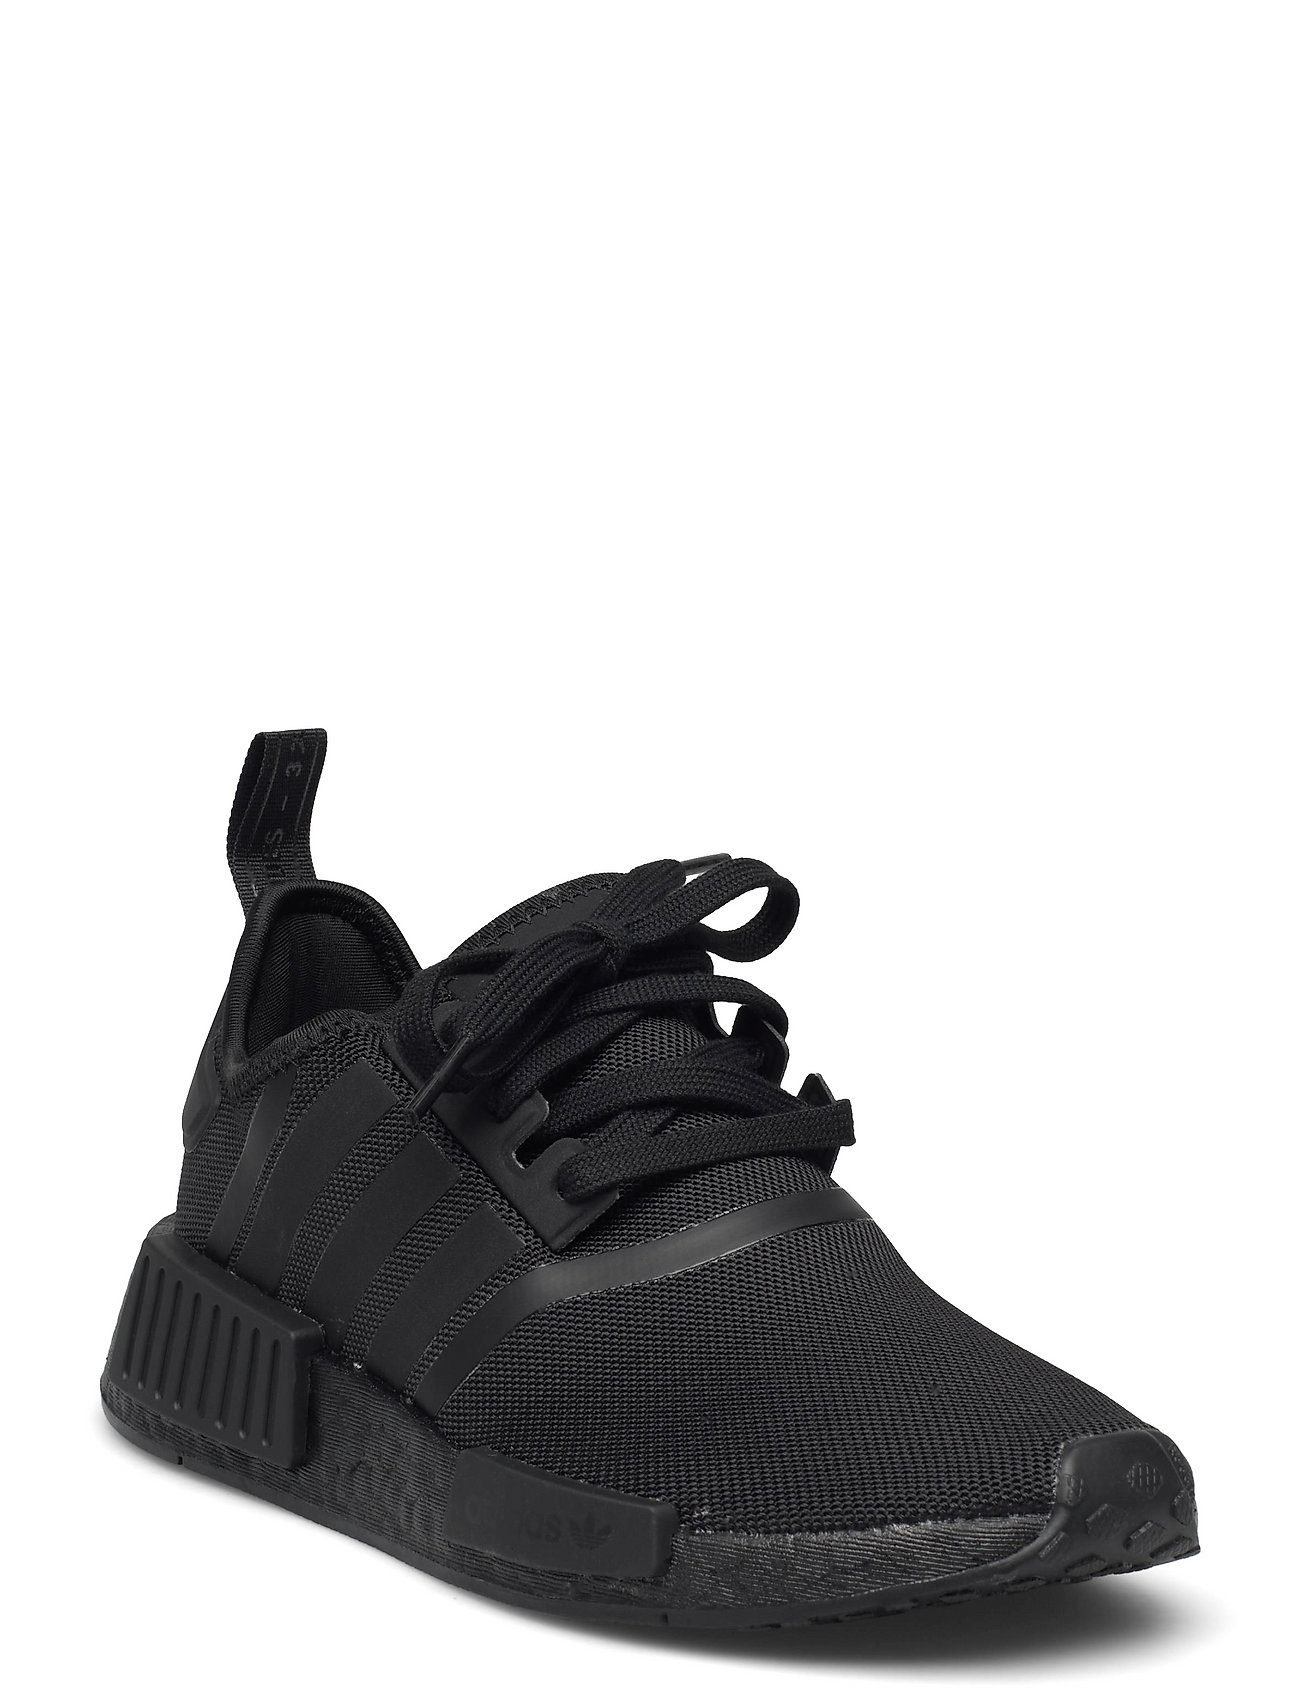 Nmd_R1 Shoes Sport Sneakers Low-top Sneakers Black Adidas Originals